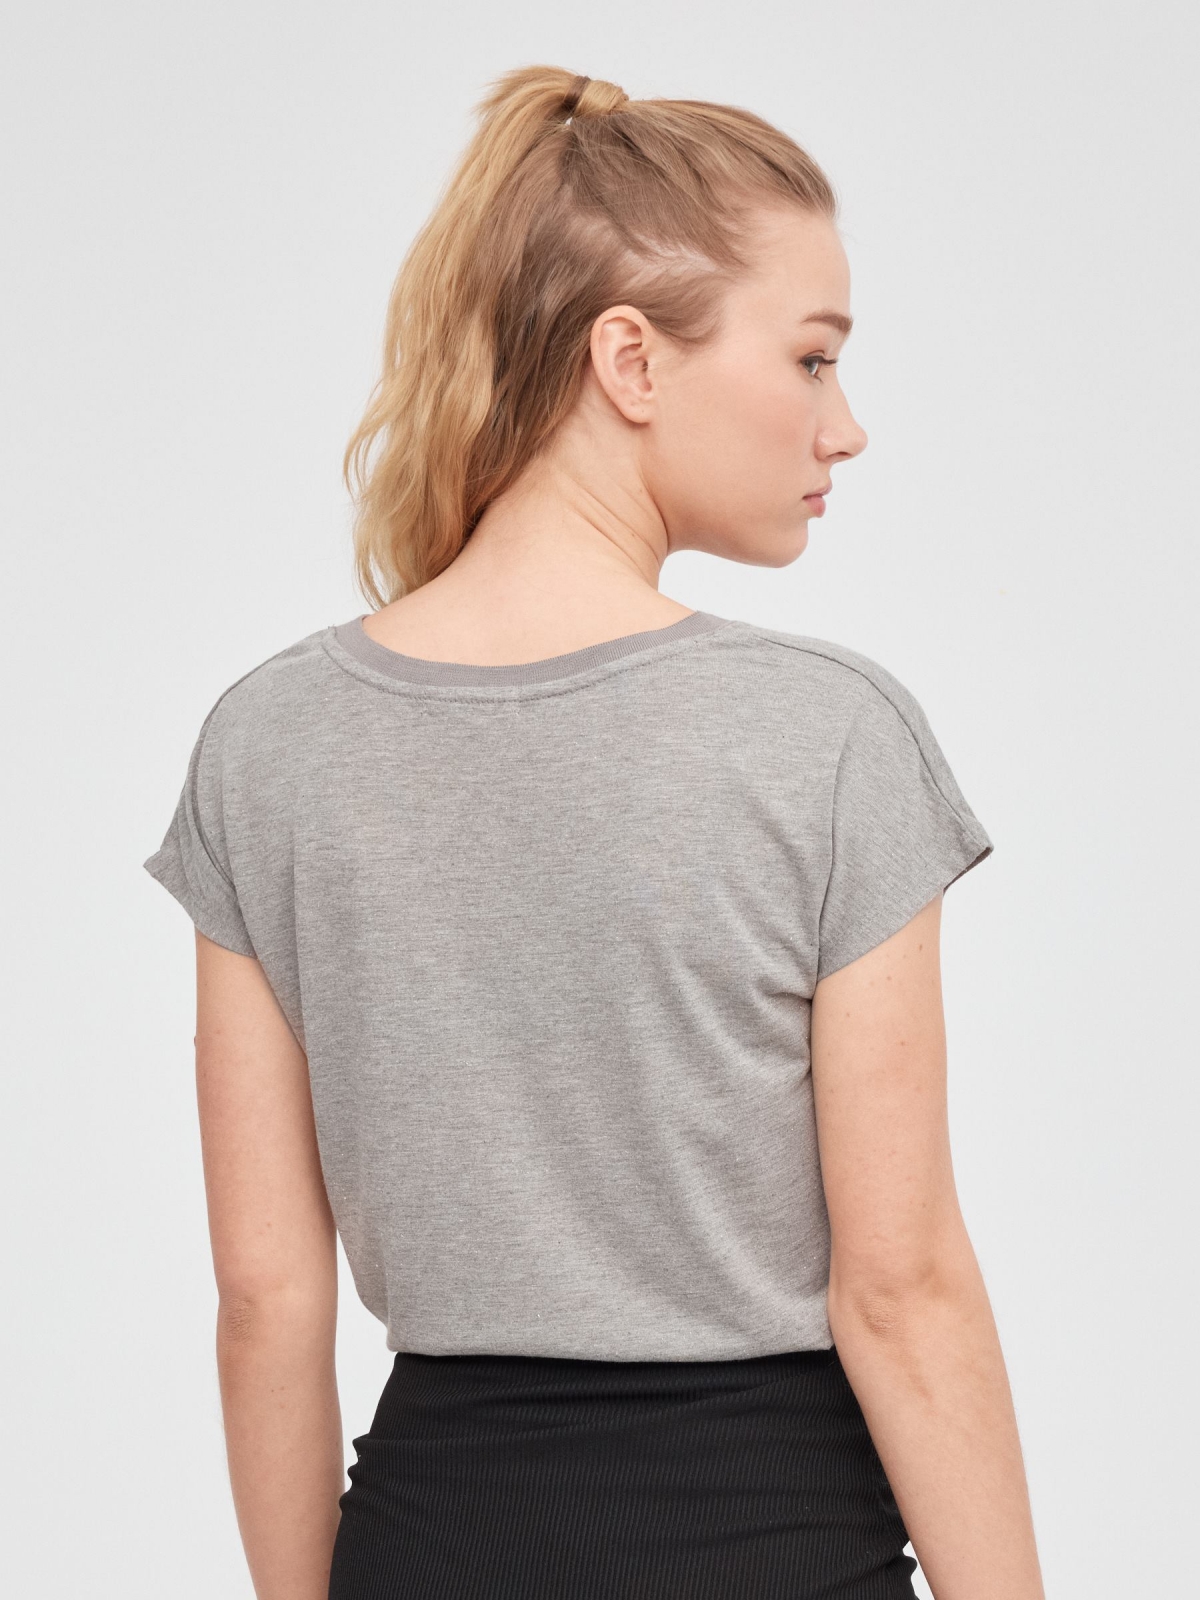 Sleeveless V-neck T-shirt grey middle back view